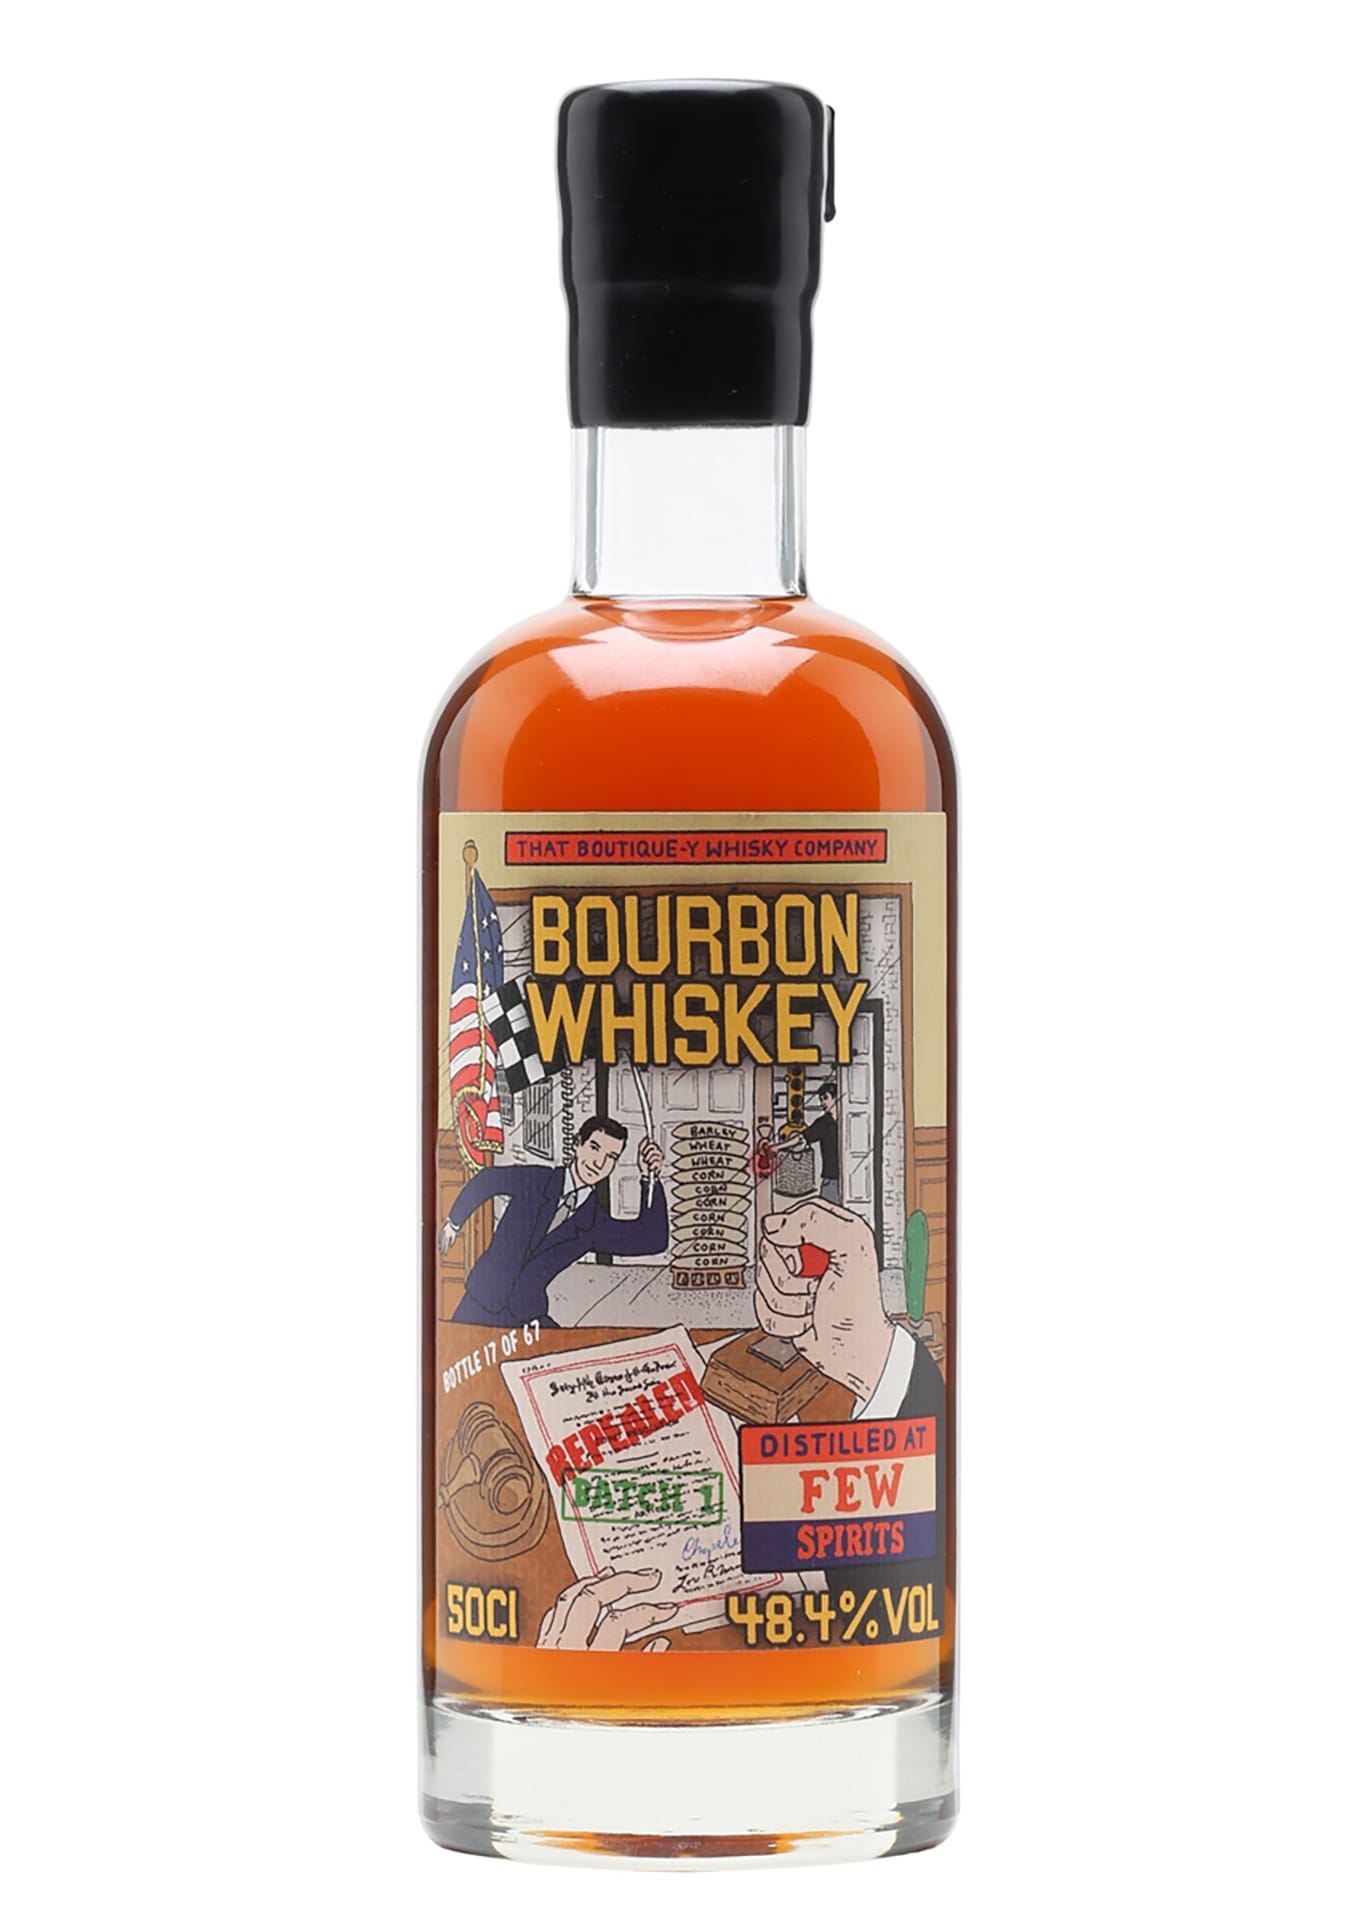 That Boutique-y Bourbon Company: Few 2 Year Old Bourbon